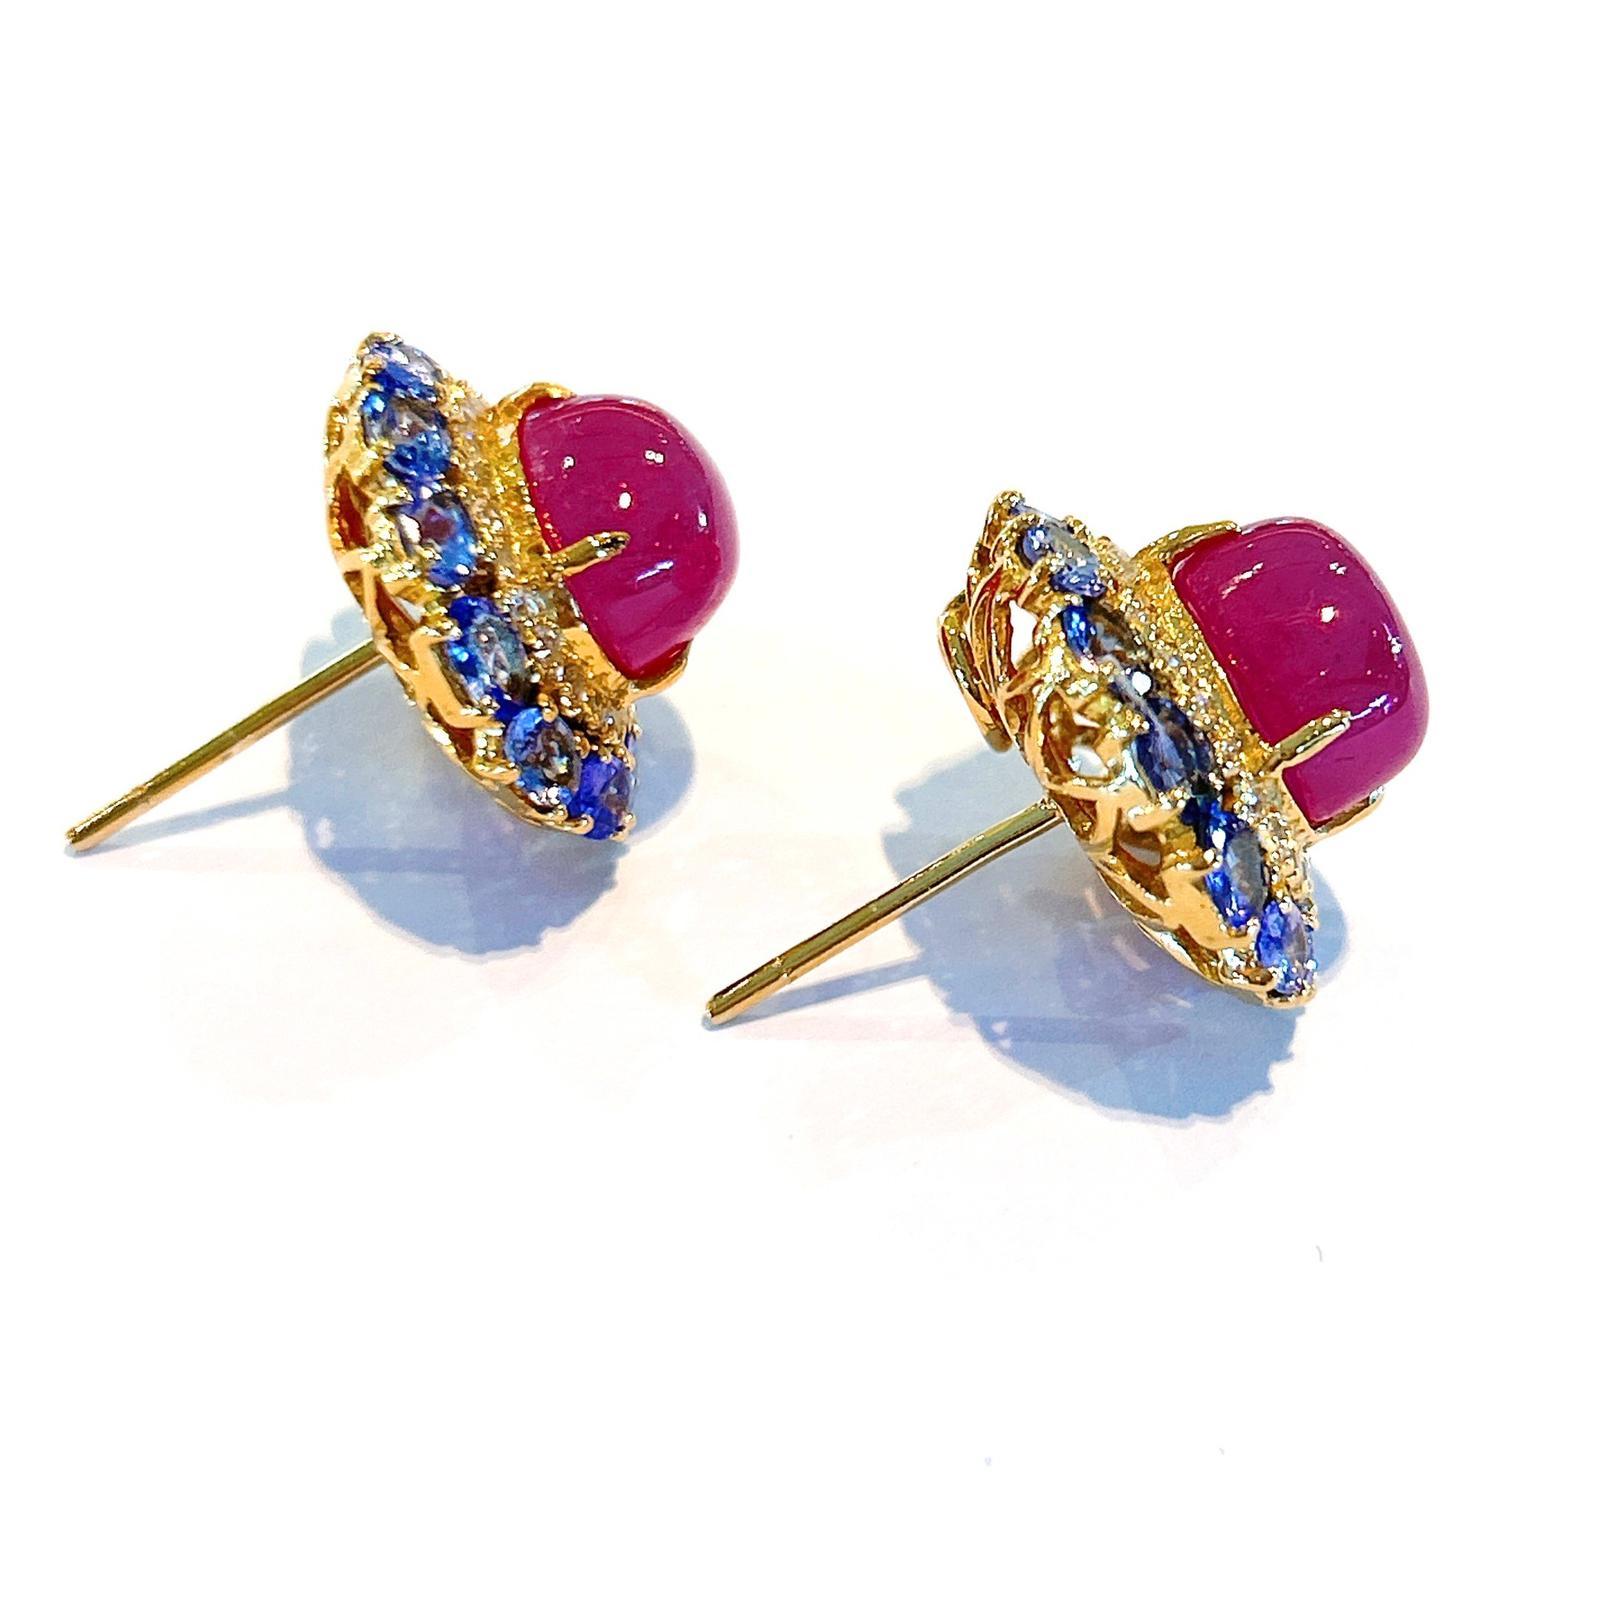 Women's Bochic “Capri” Earrings & Cocktail Ring, Multi Gems Set in 22k Gold & Silver